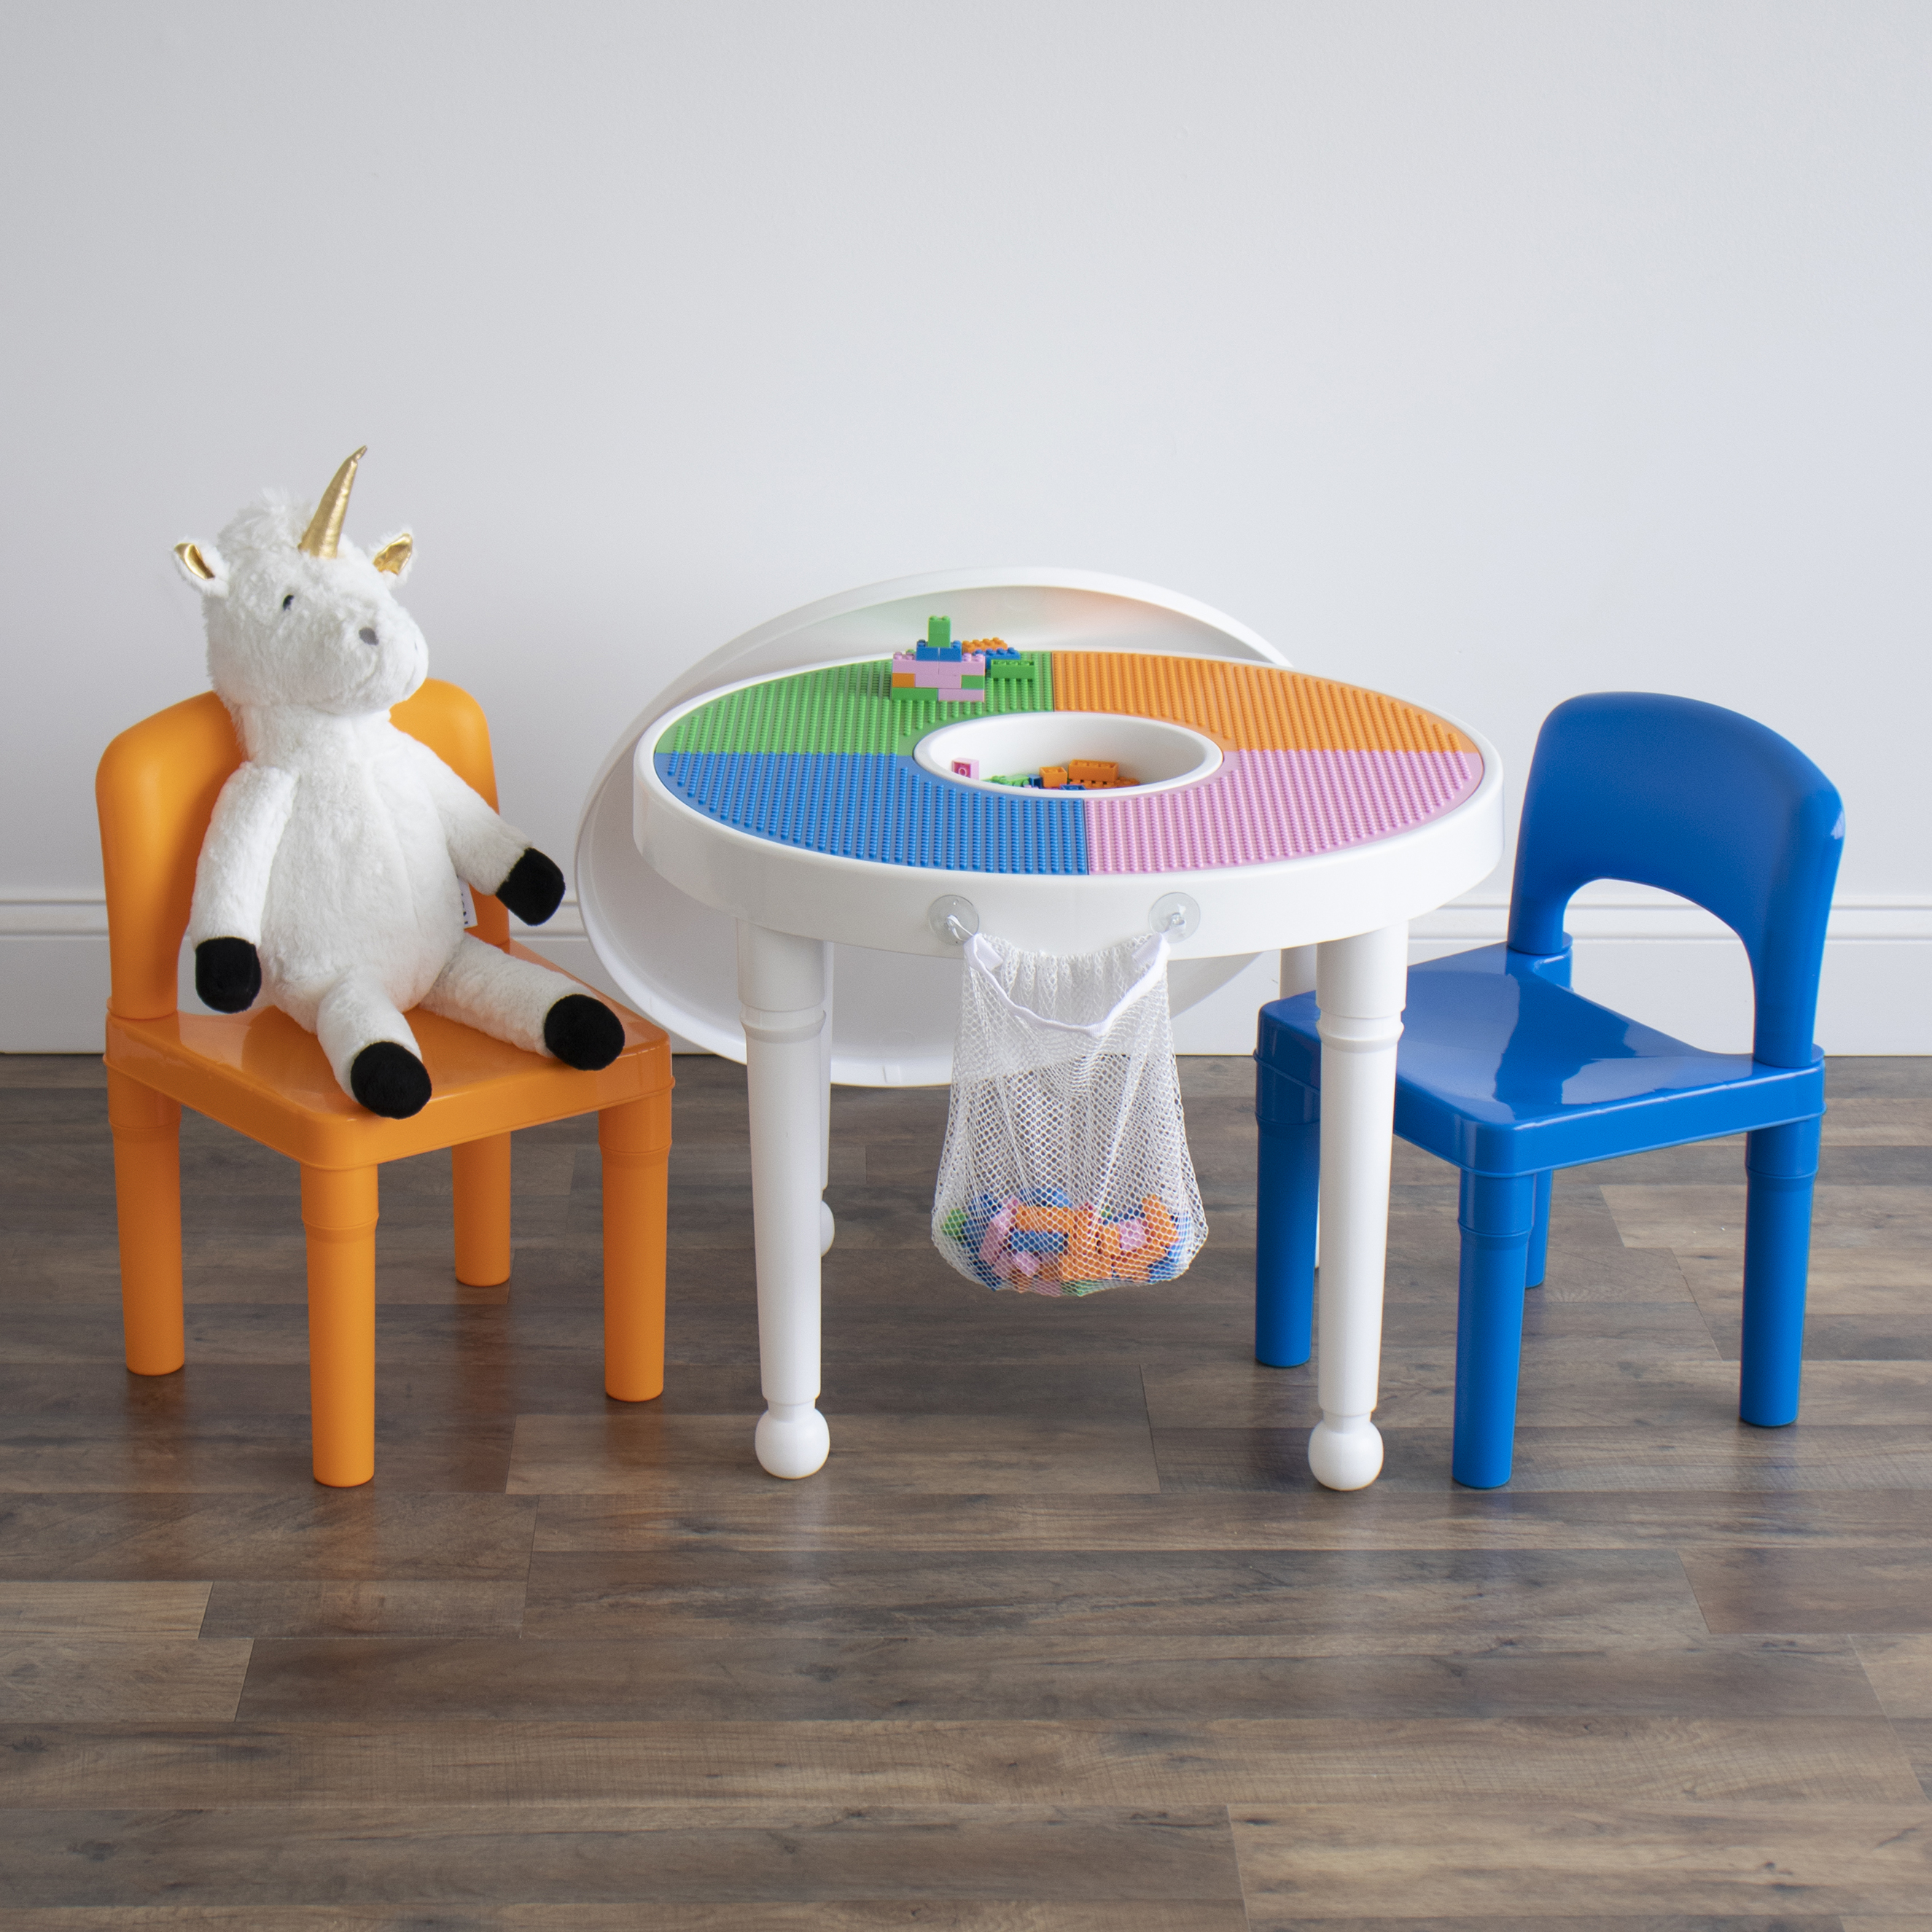 Humble Crew Kids 3pc Plastic Dry-Erase Activity Table & Chair Set with 100 Building Blocks, White, Orange, Blue - image 1 of 20